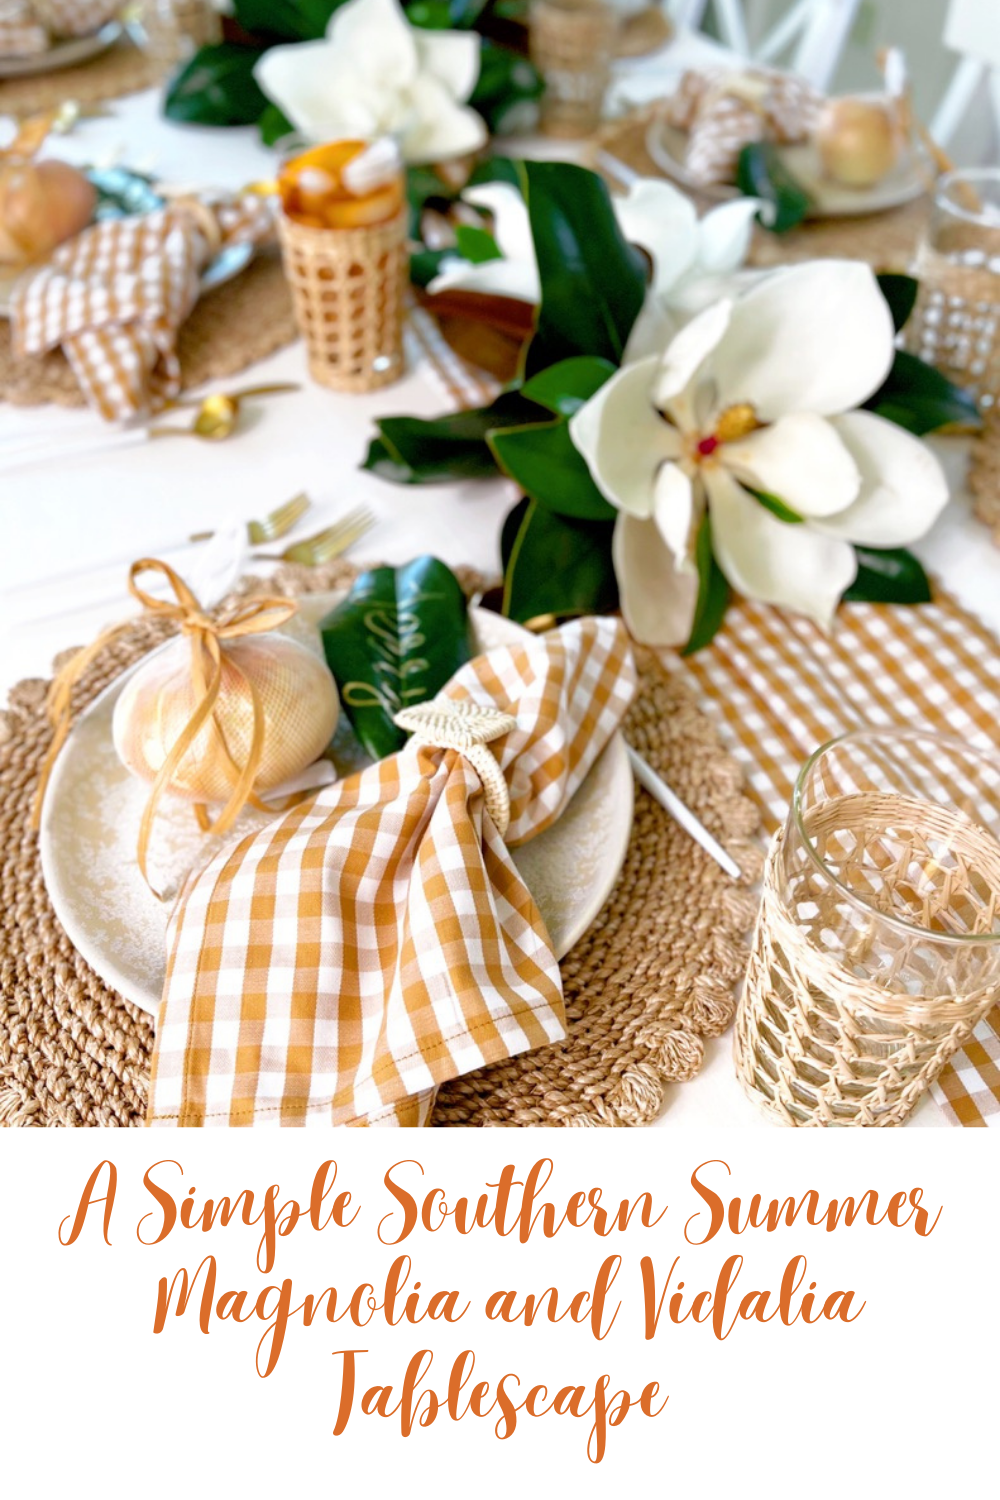 Vidalias & Magnolias - A Simple Southern Summer Tablescape